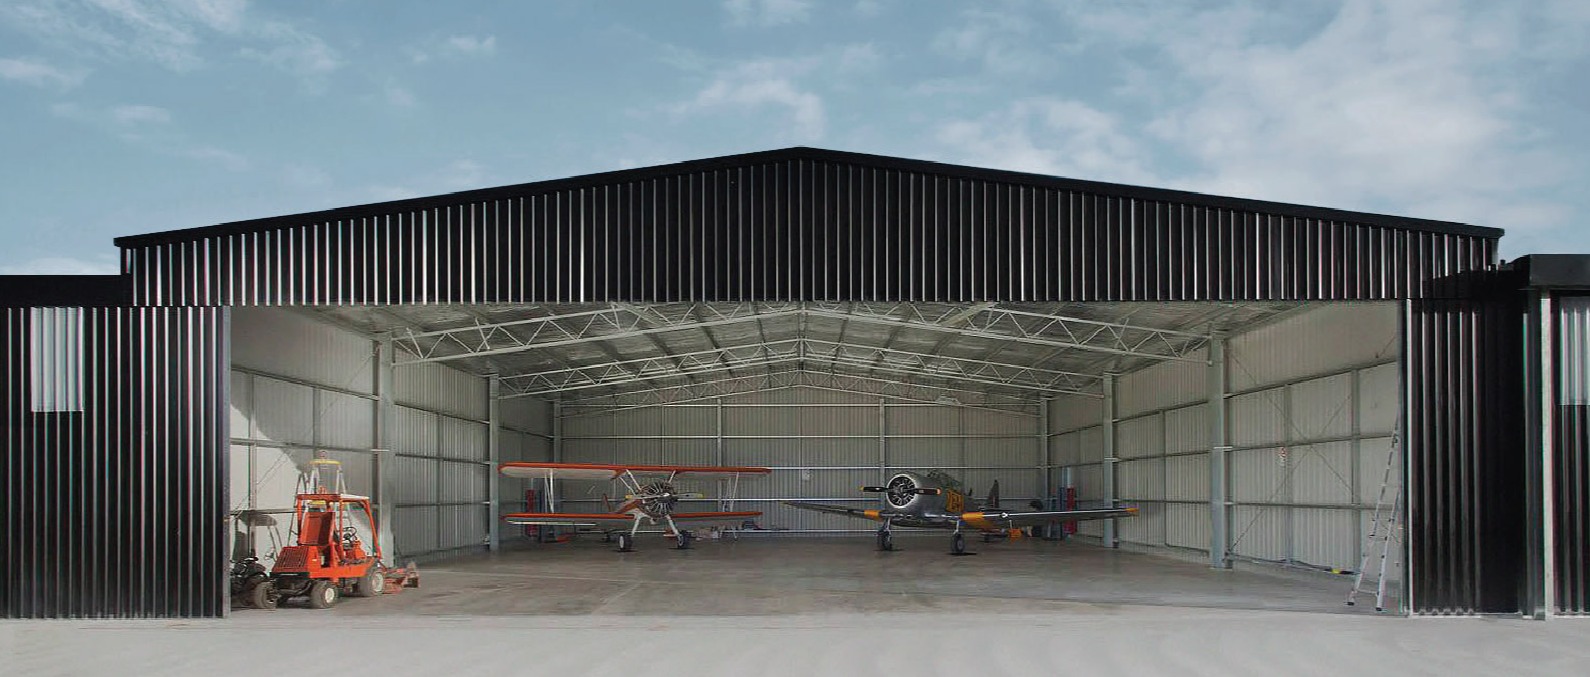 Riddels Creek aircraft hangars